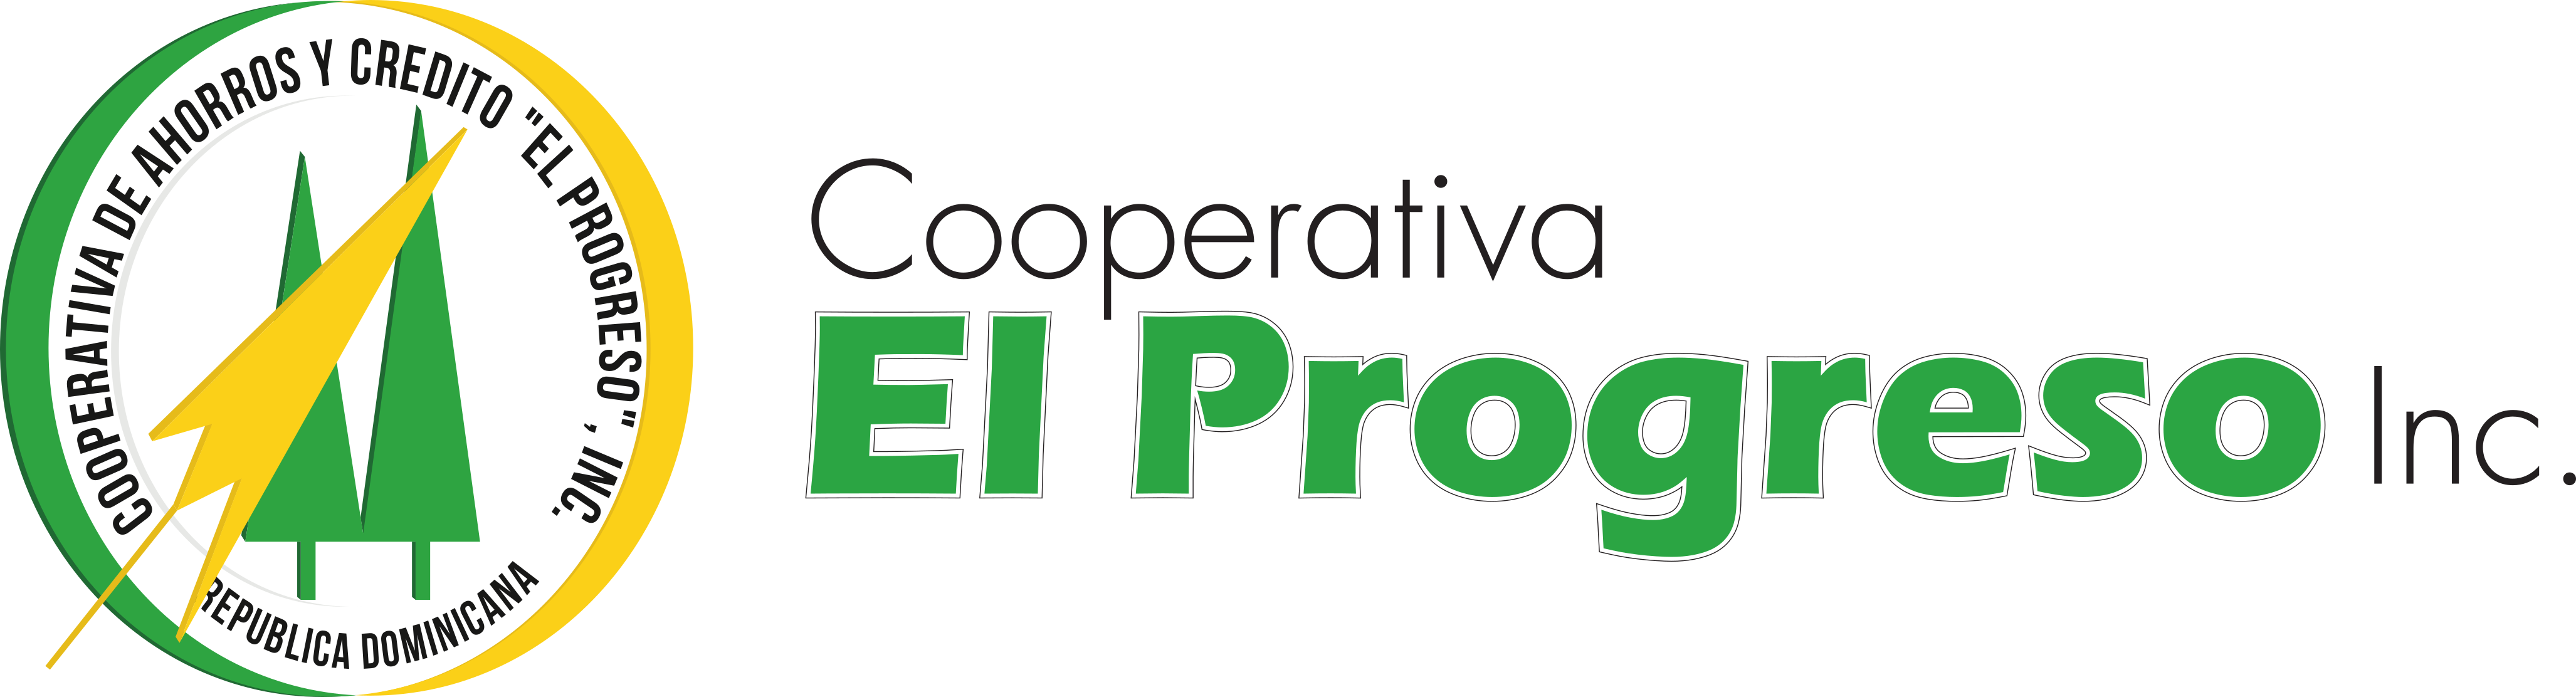 Cooperativa El Progreso